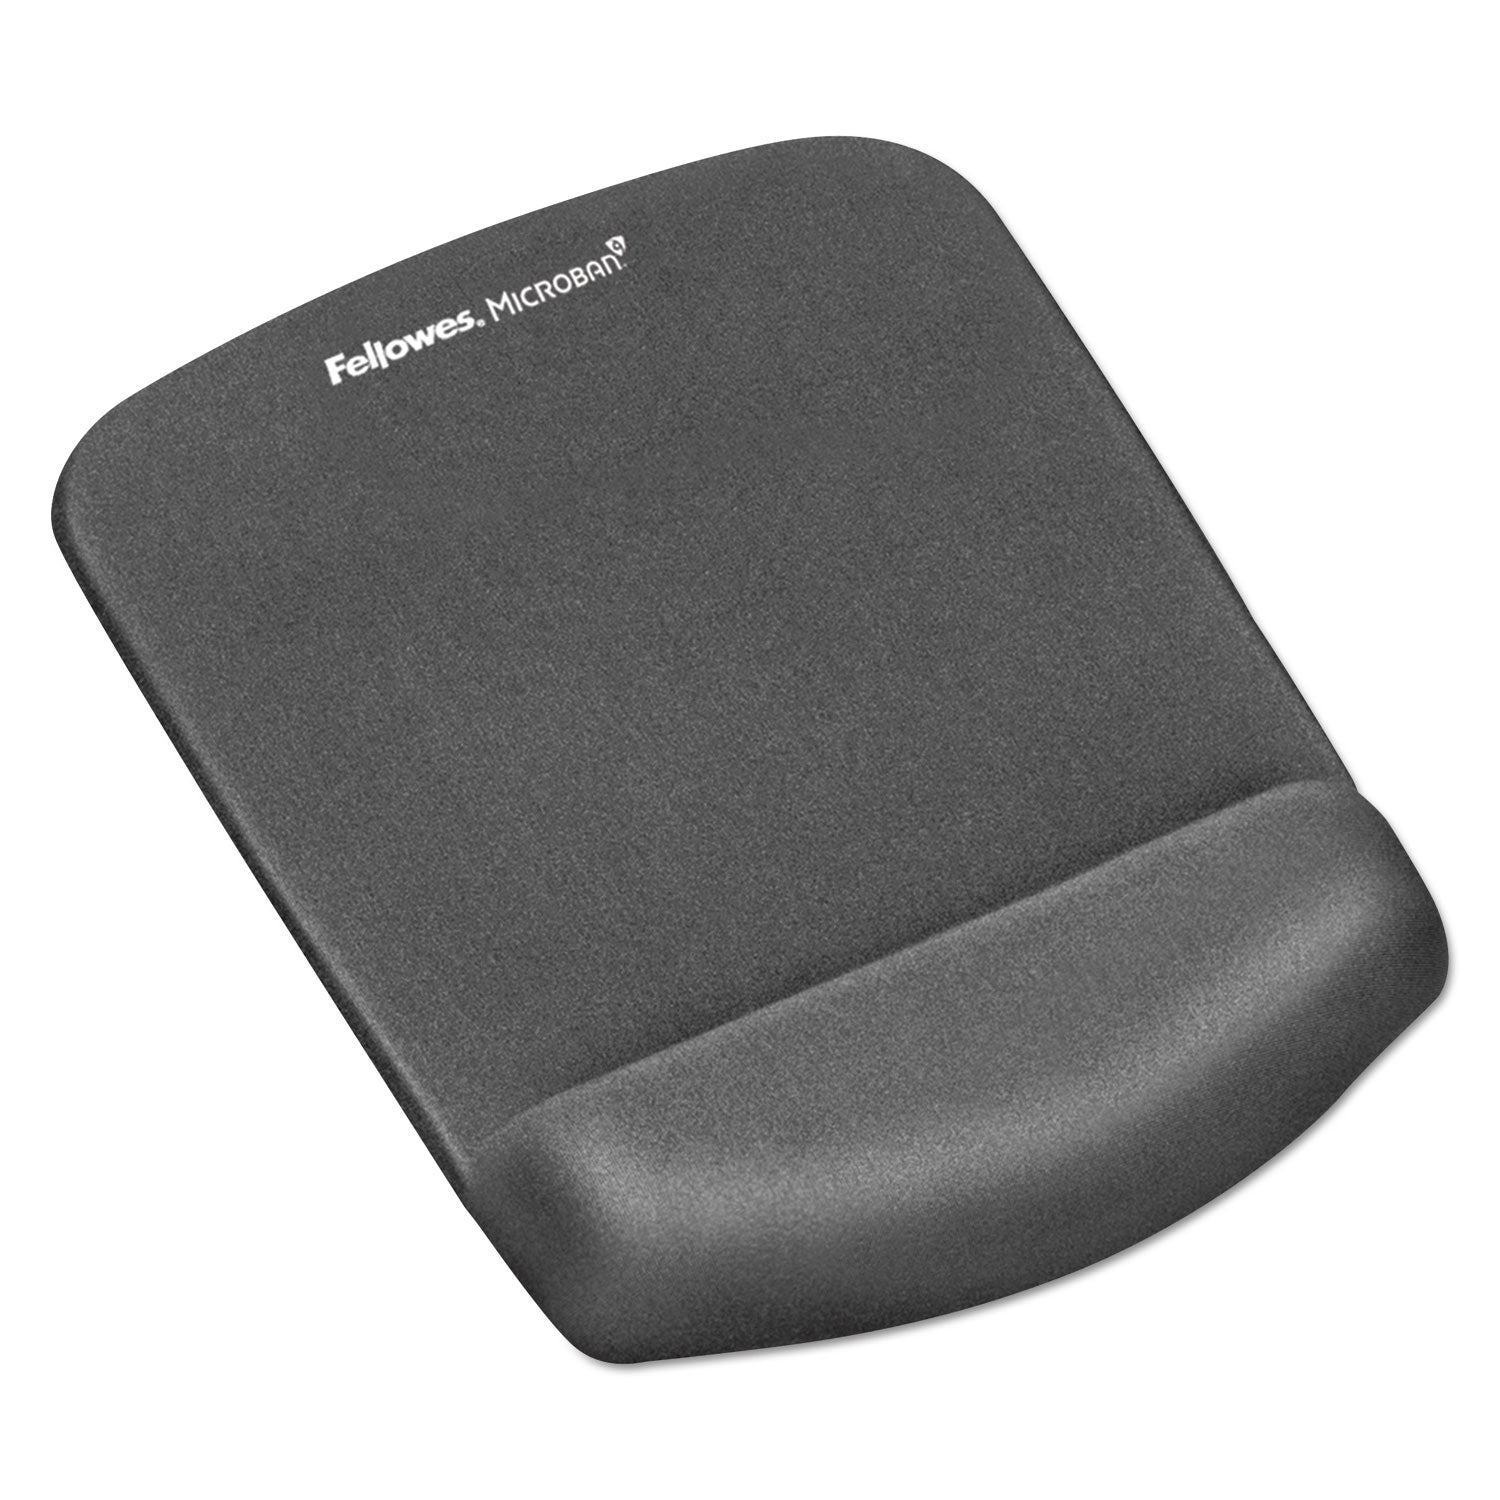 PlushTouch Mouse Pad with Wrist Rest, 7.25 x 9.37, Graphite - 